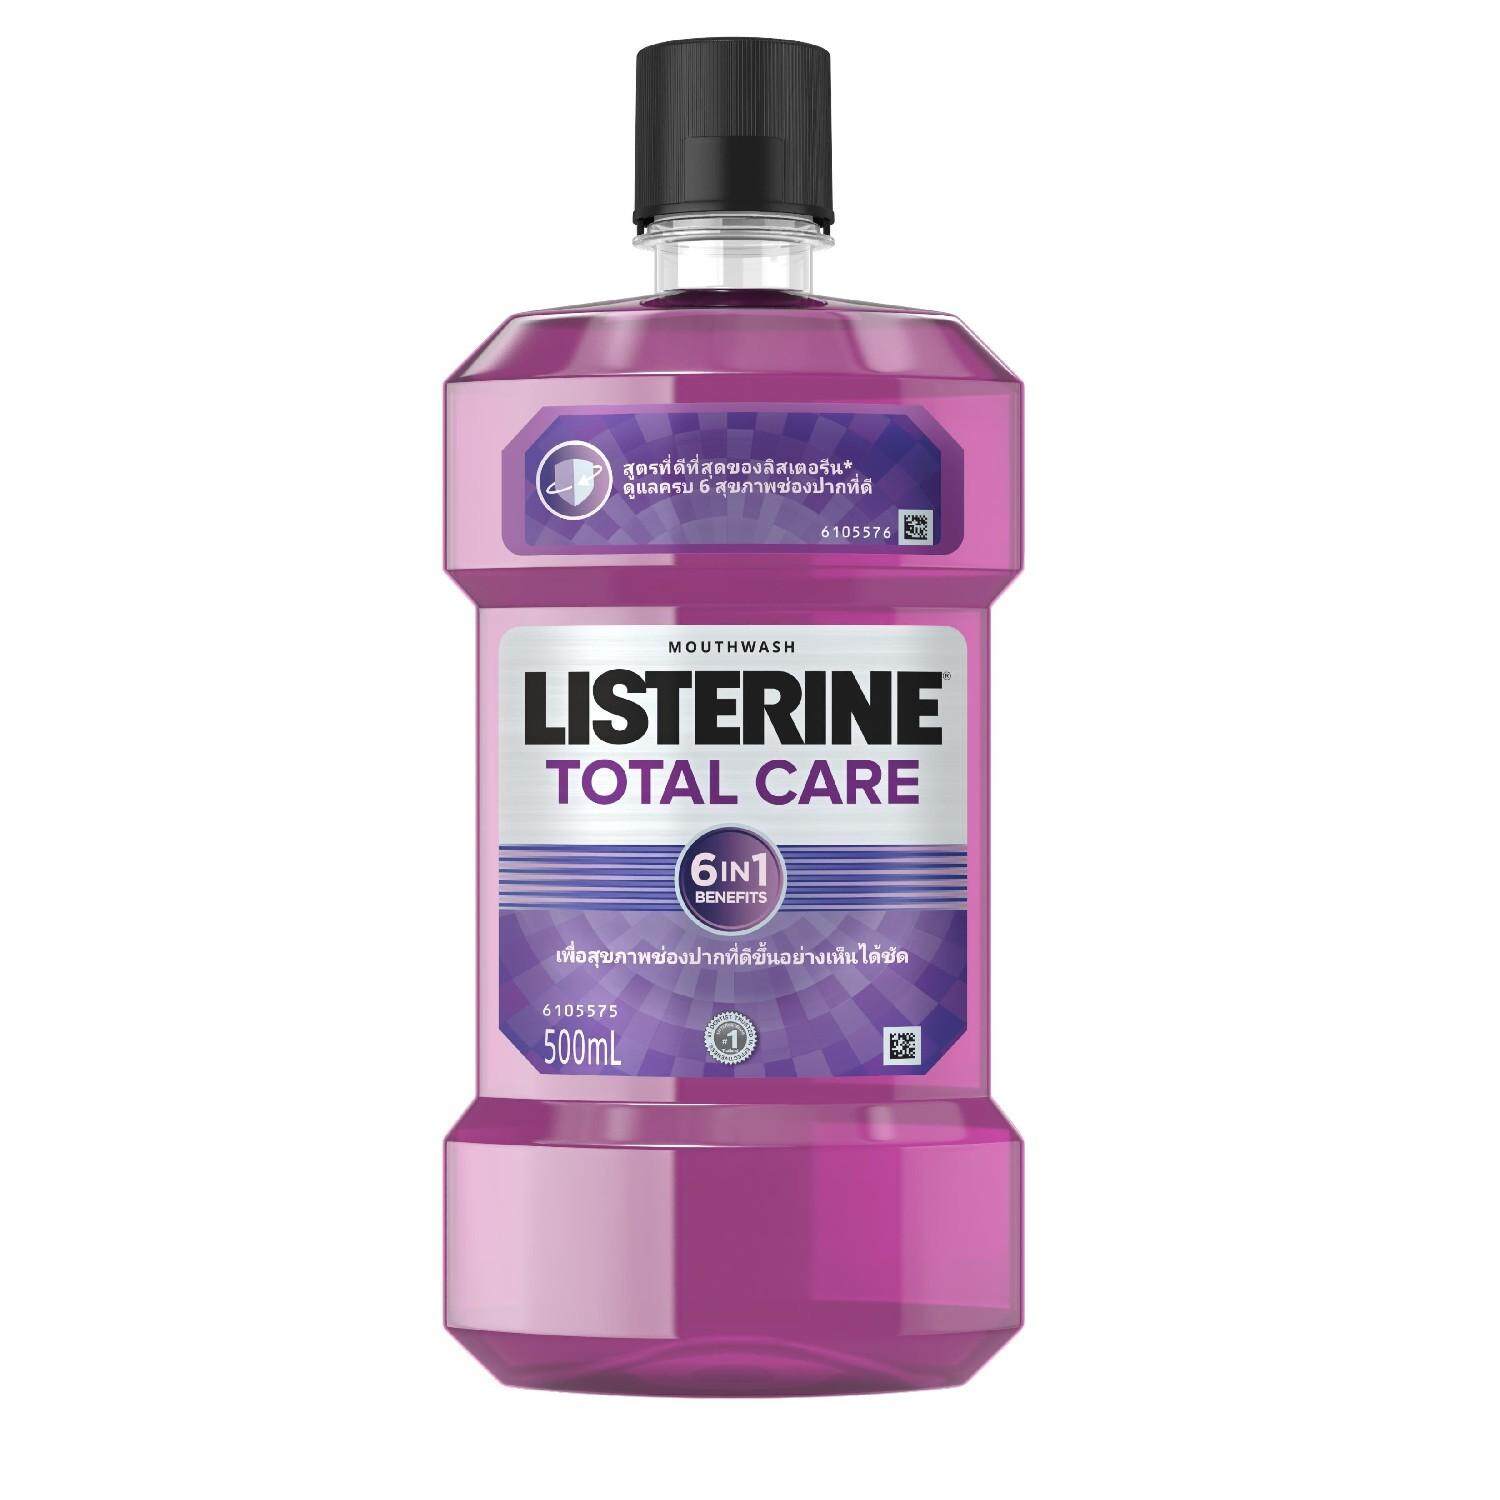 Listerine ลิสเตอรีน น้ำยาบ้วนปาก โทเทิลแคร์ 500 มล. Listerine mouthwash Total care 500ml. (Mouthwash,Mouth,Oral,Oral Care,น้ำยาบ้วนปาก,ช่องปาก,สุขภาพฟัน) ของแท้